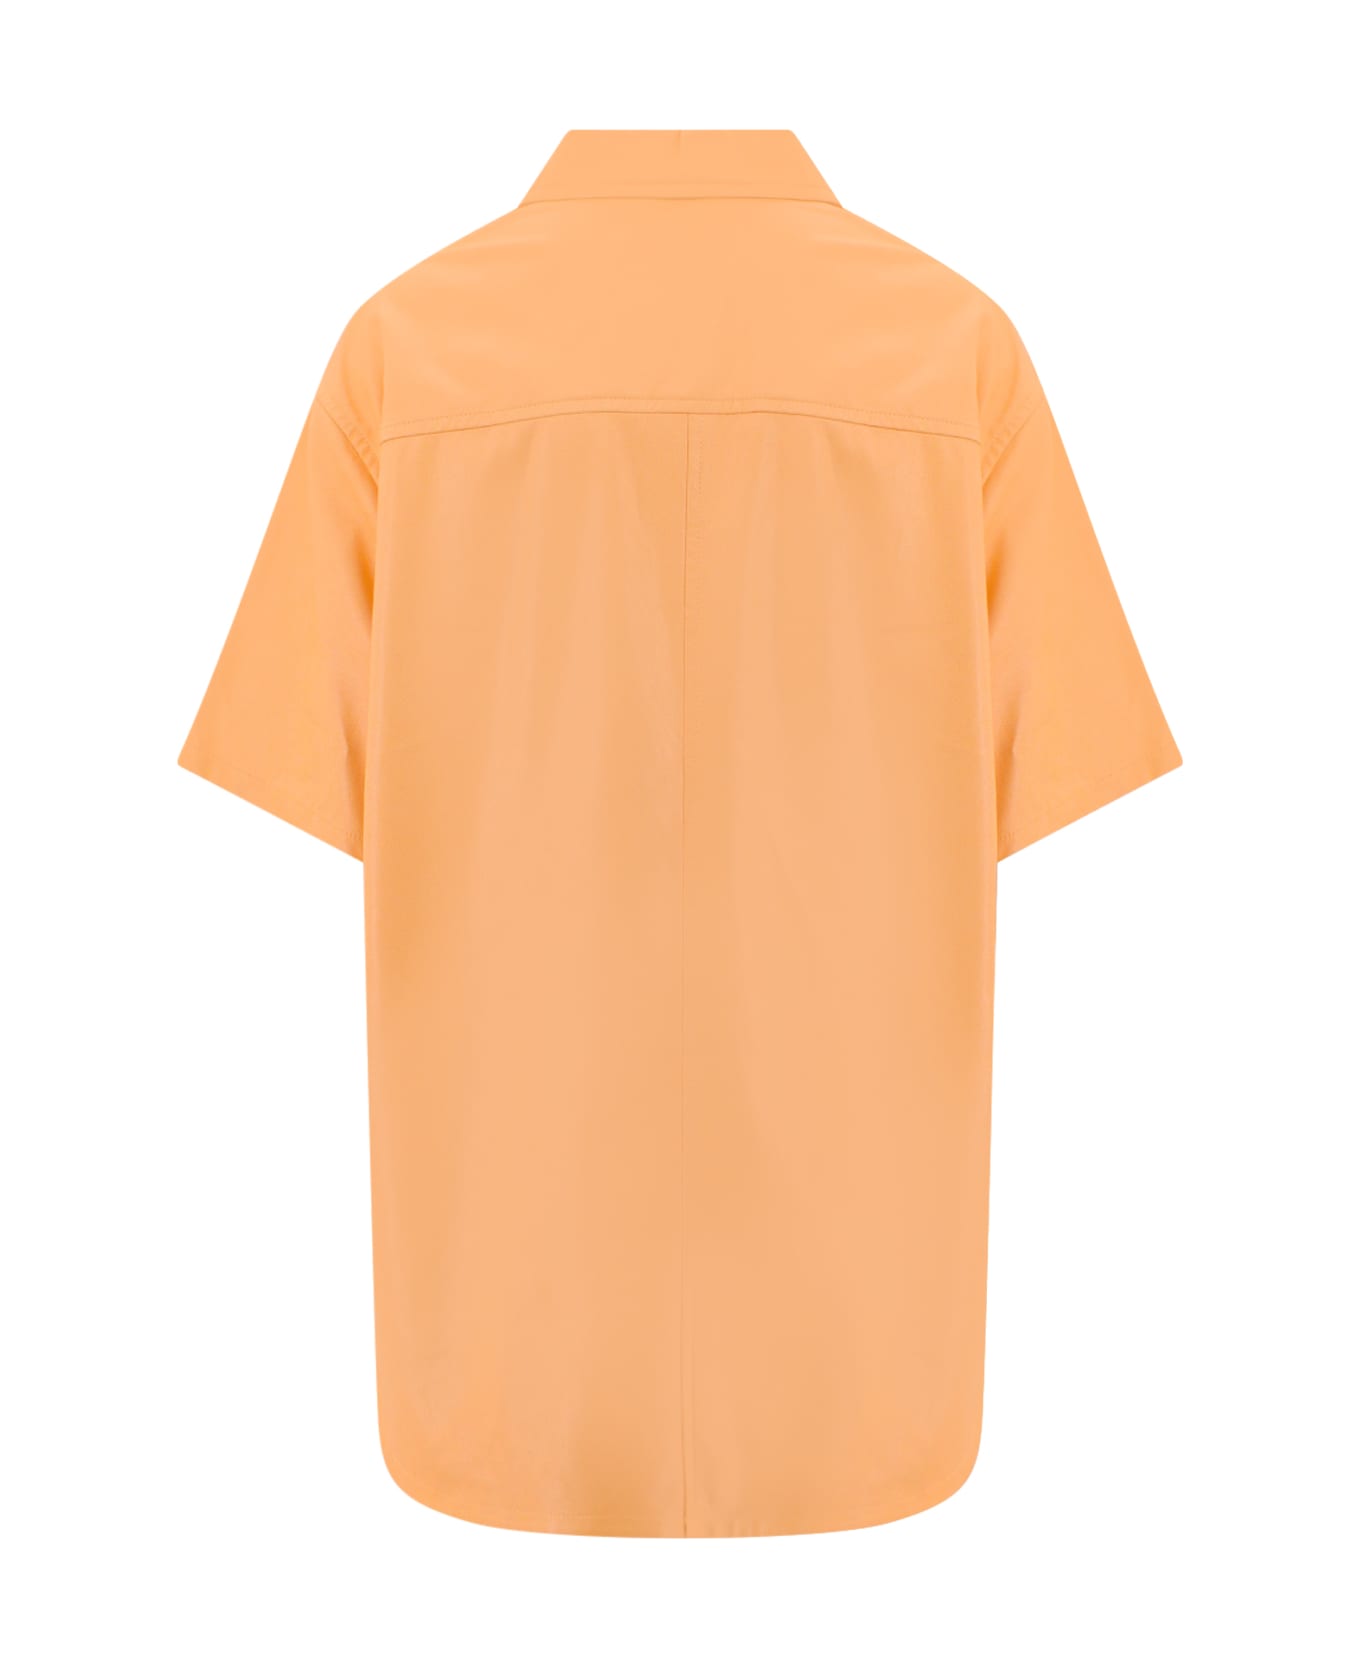 STAND STUDIO Norea Shirt - Orange シャツ